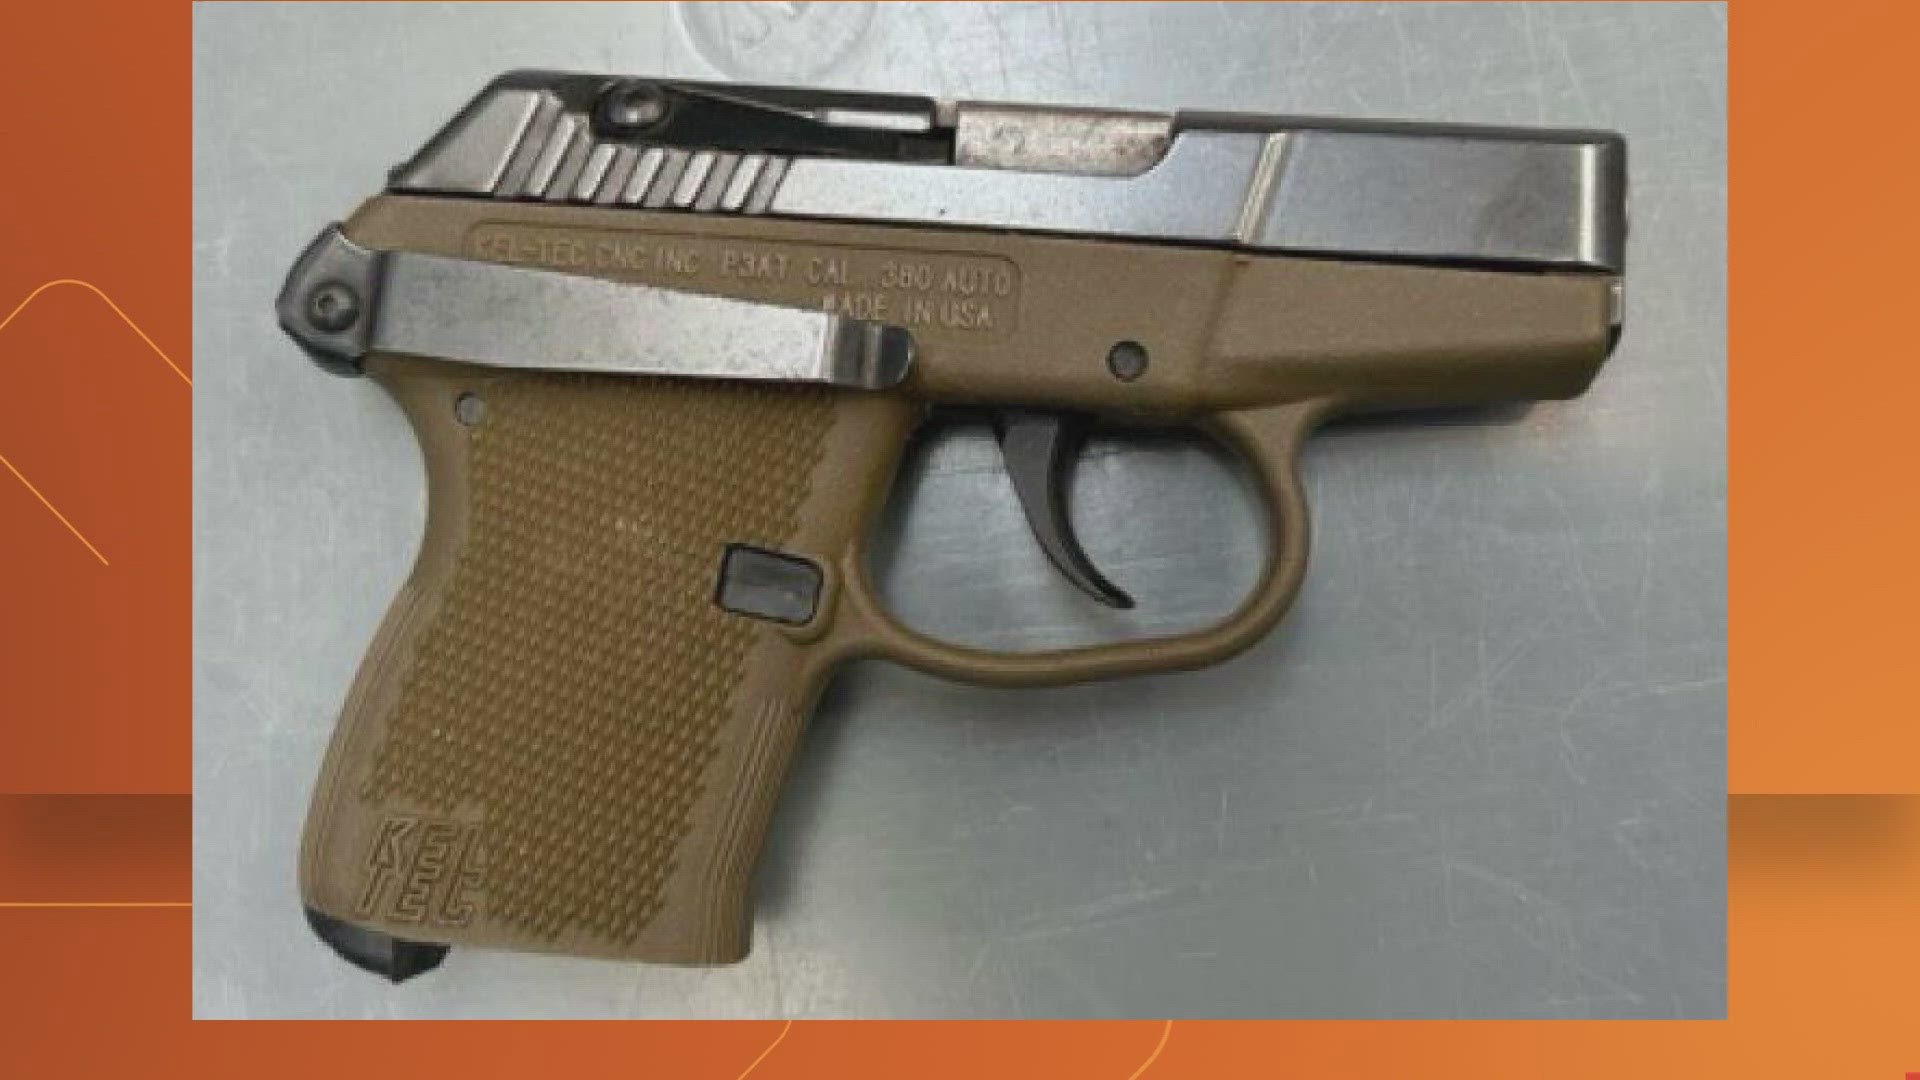 TSA said Congresswoman Spartz has the gun in her carry-on bag when she went through security.